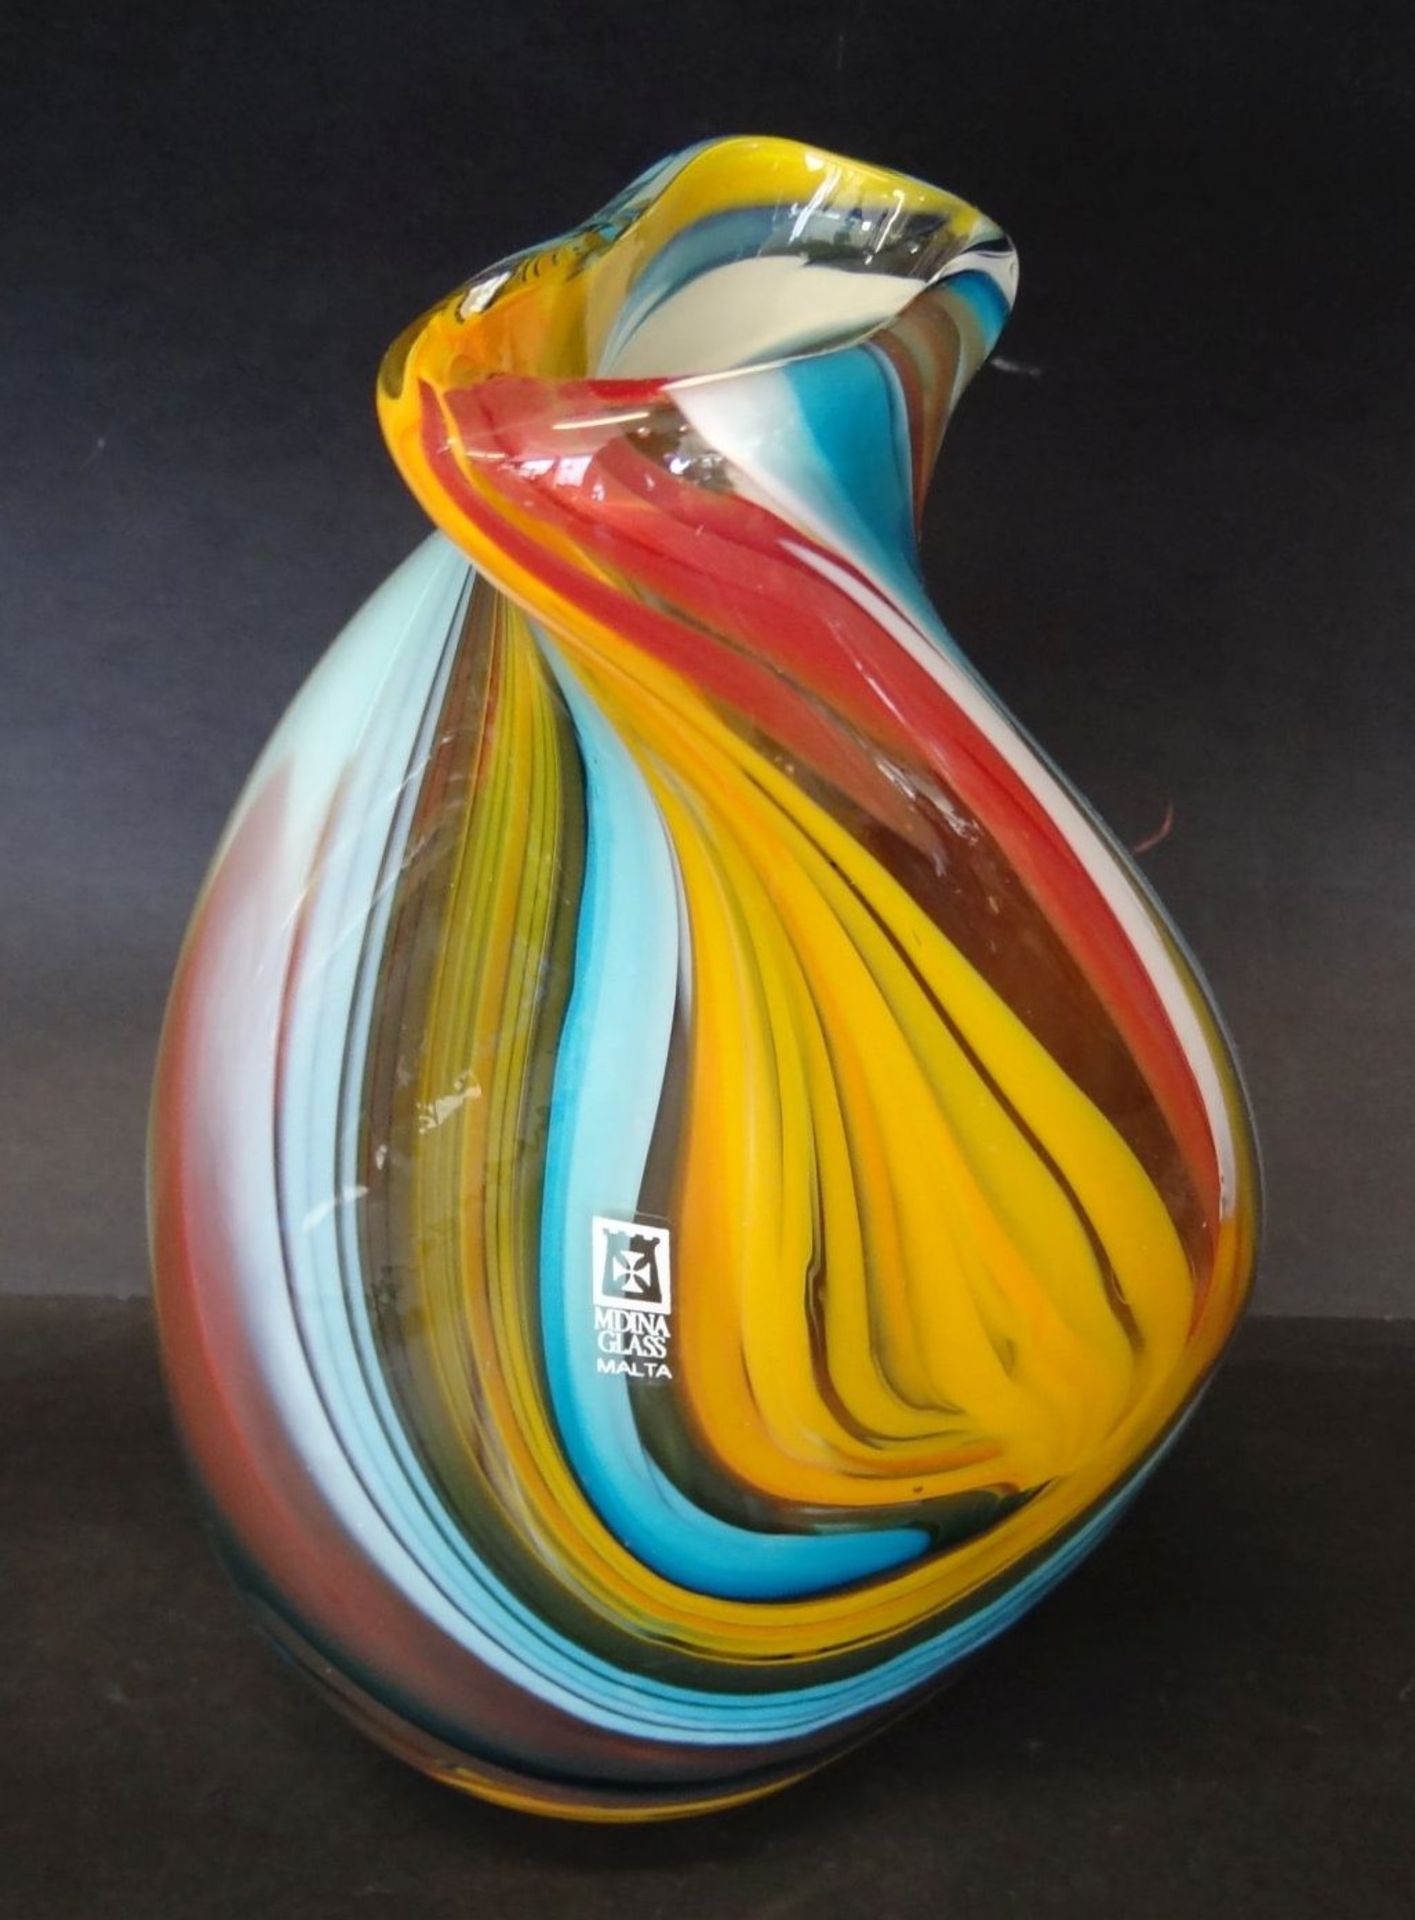 Kunstglasvase "Mdina" Malta, Etikett, in Boden Ritzsignatur, H-18 cm